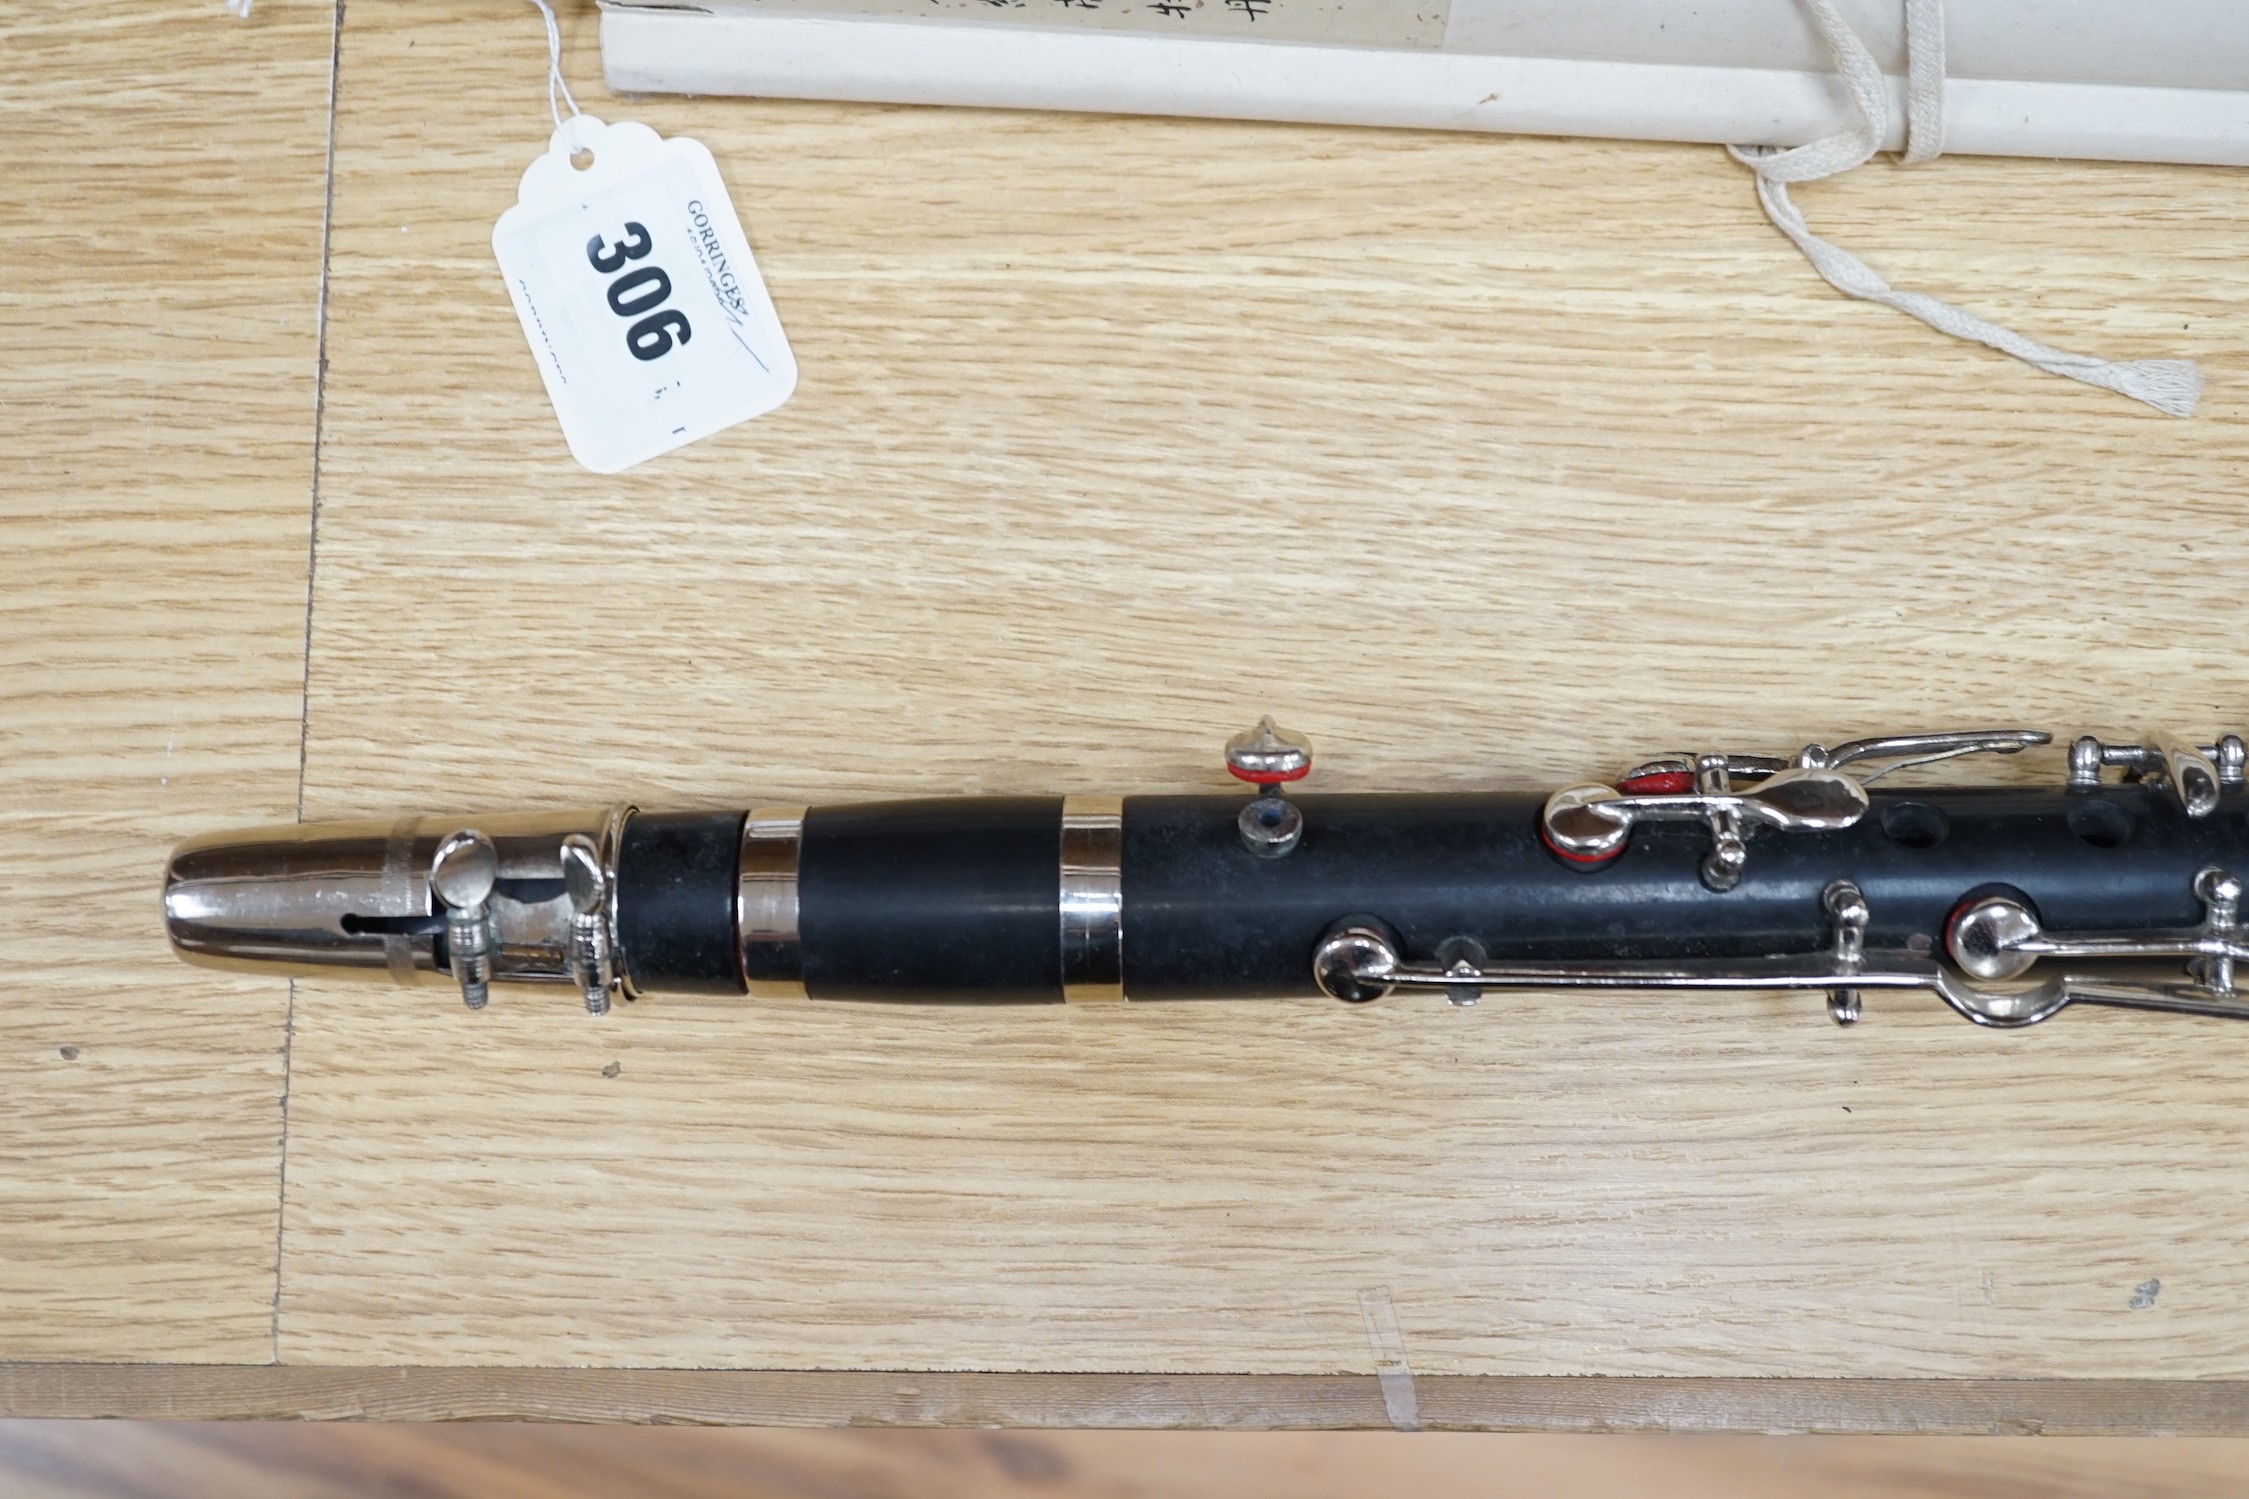 An ebonised clarinet, 65cms long